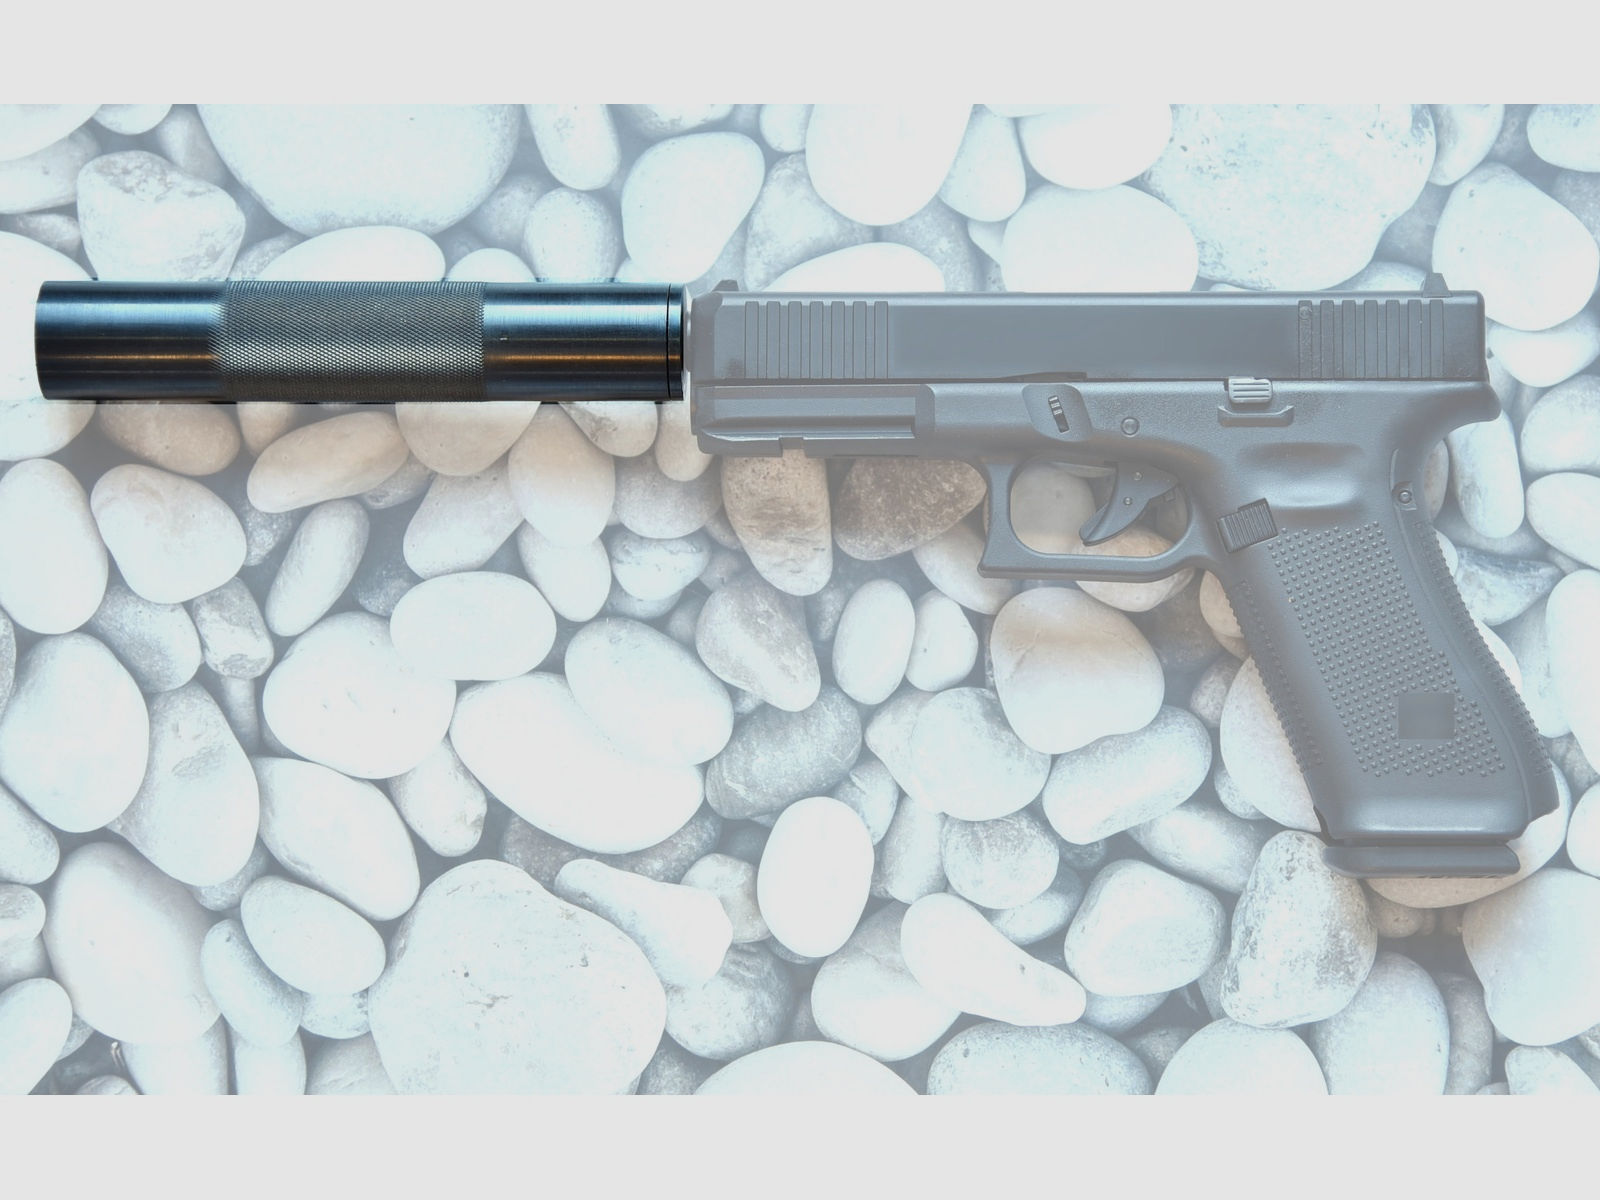 Schalldämpfer für PK380, Colt 1911, Zoraki, 9mm PAK KNALL